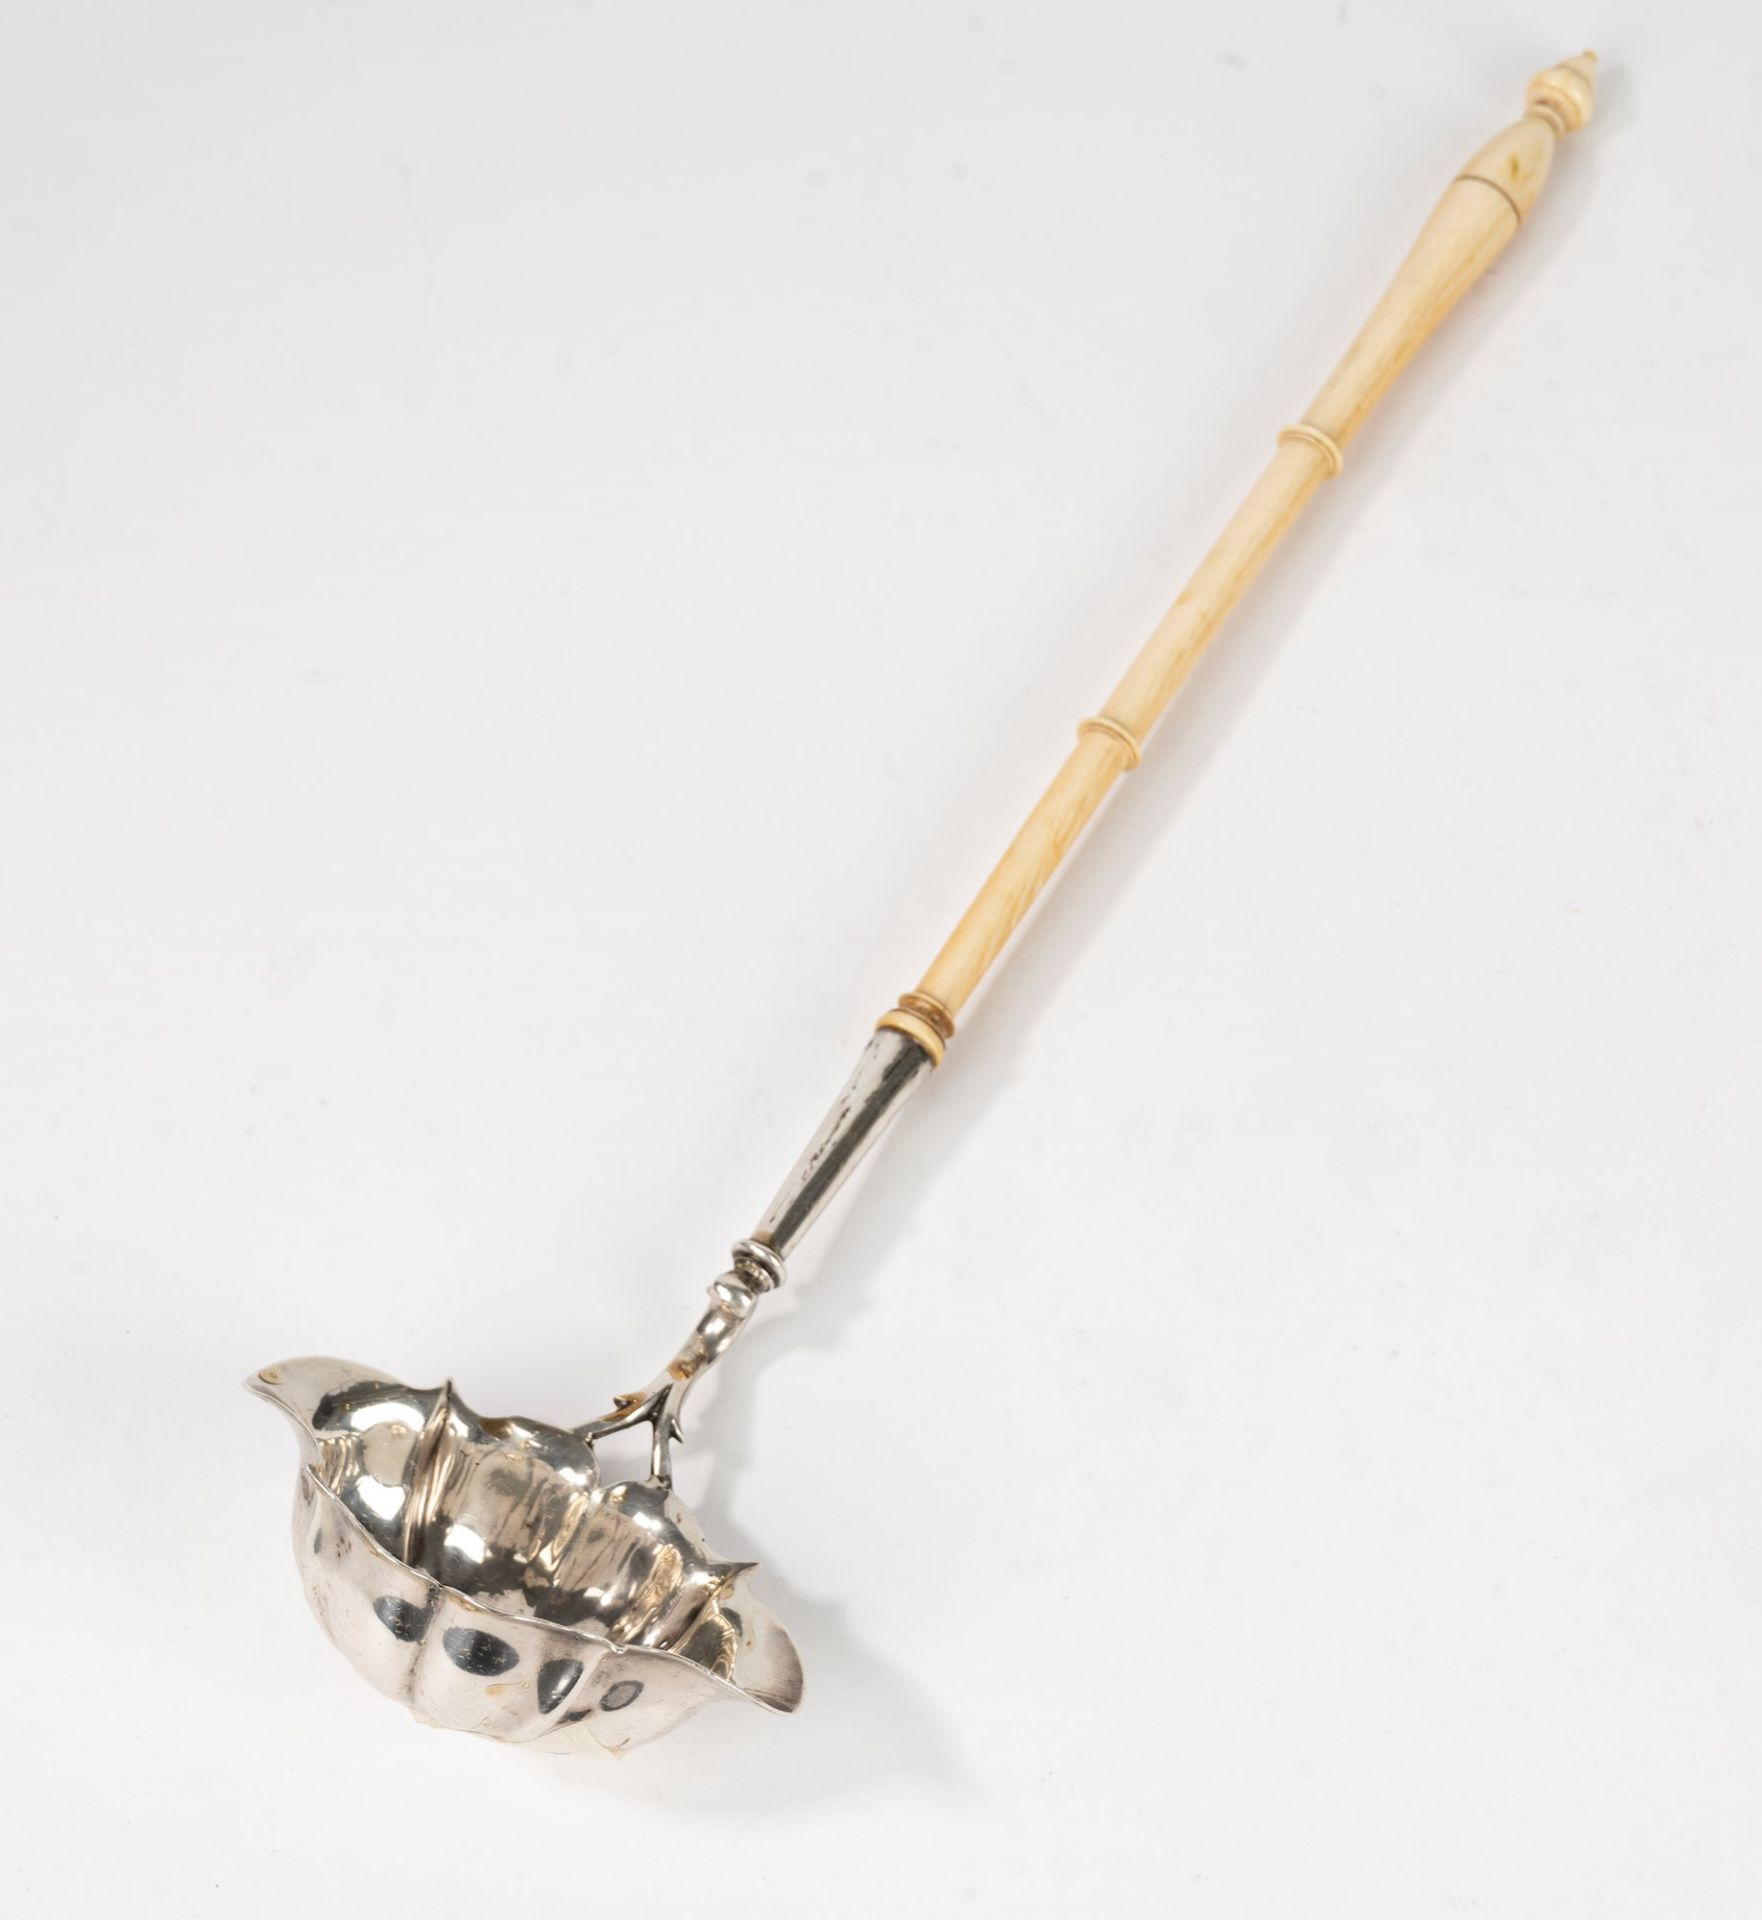 Silver and bone ladle, England, 19th century